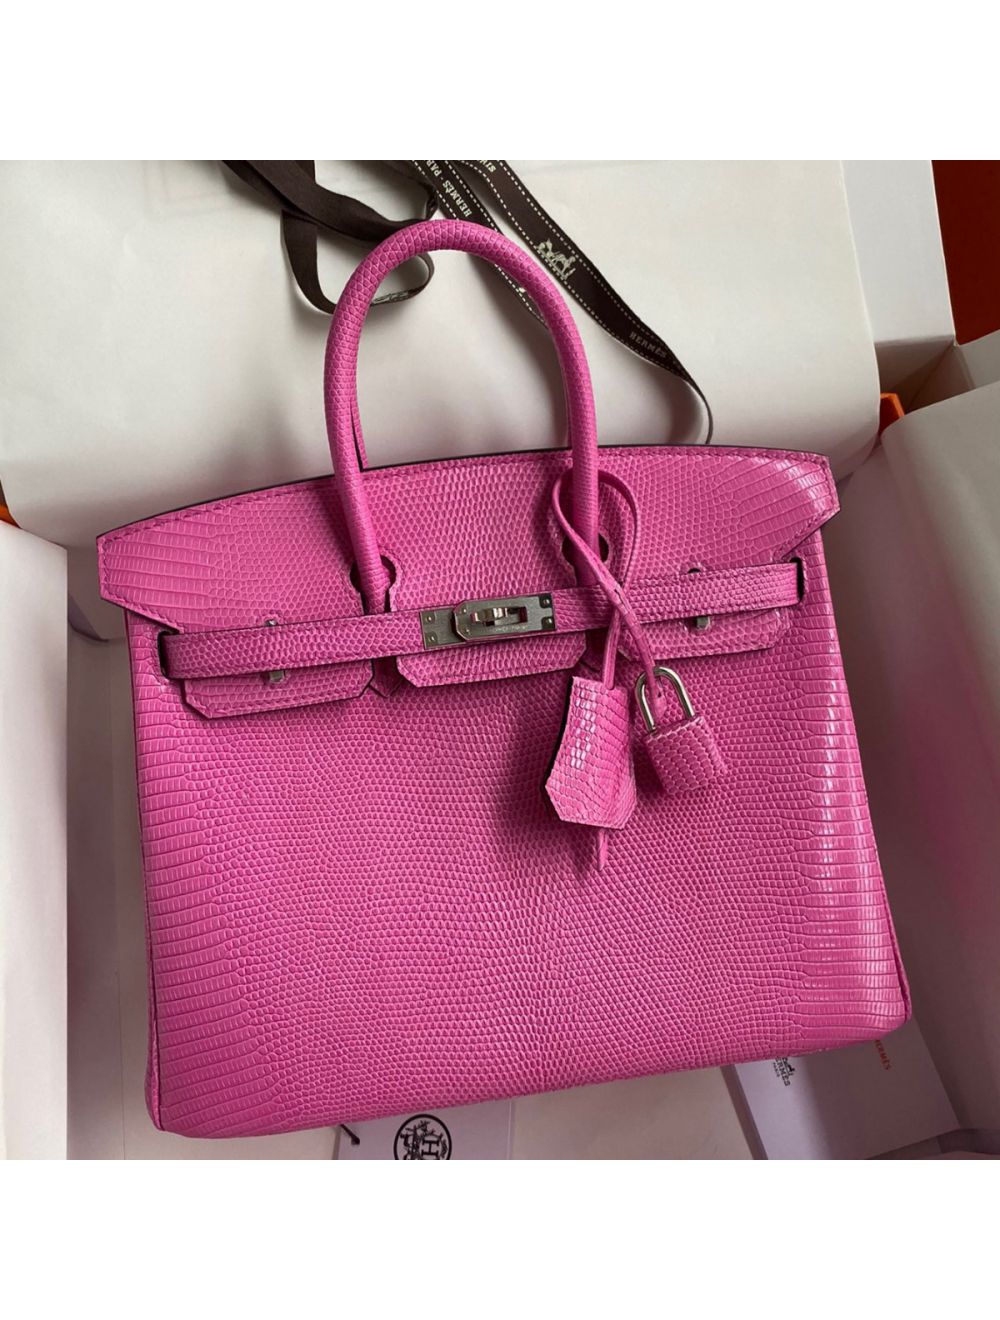 Replica Hermes Birkin 25 Retourne Handmade Bag In Pink Lizard Leather